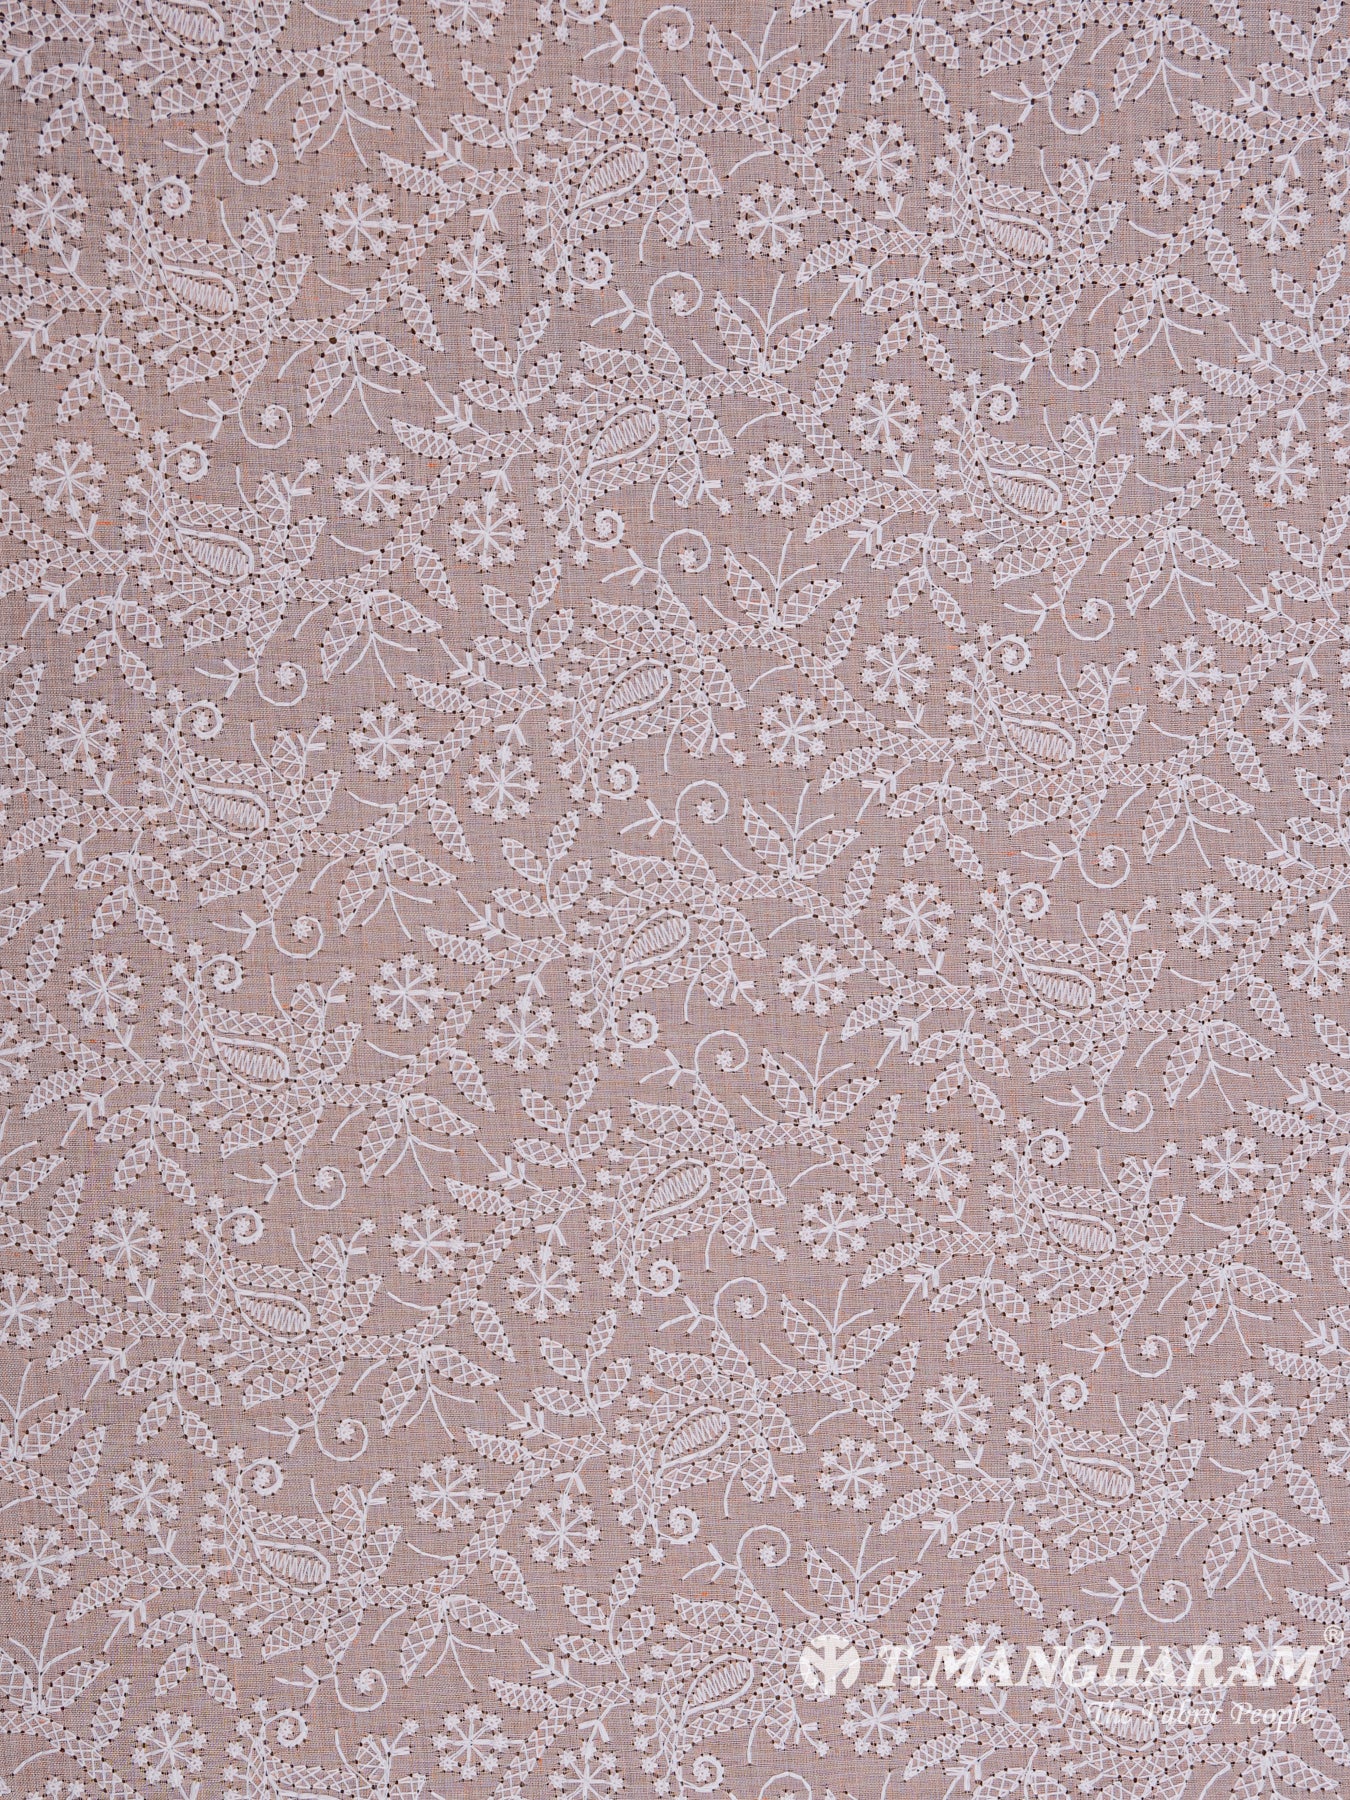 Peach Cotton Embroidery Fabric - EB4807 view-3